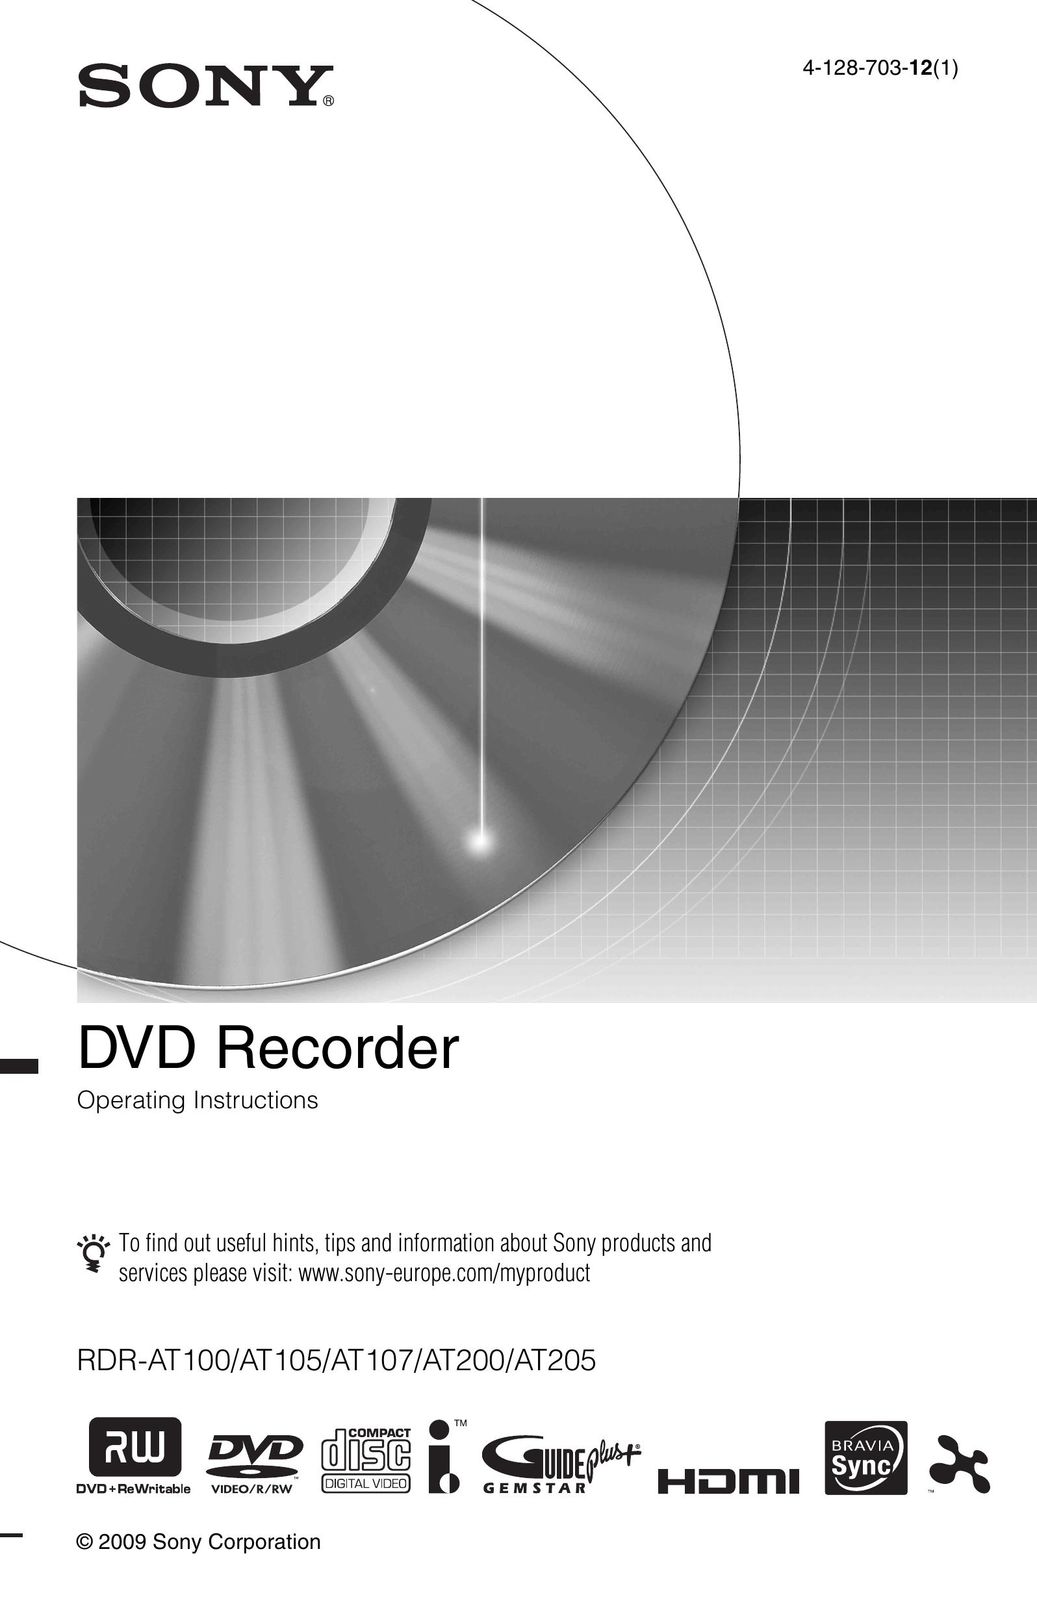 Sony AT107 DVD Recorder User Manual